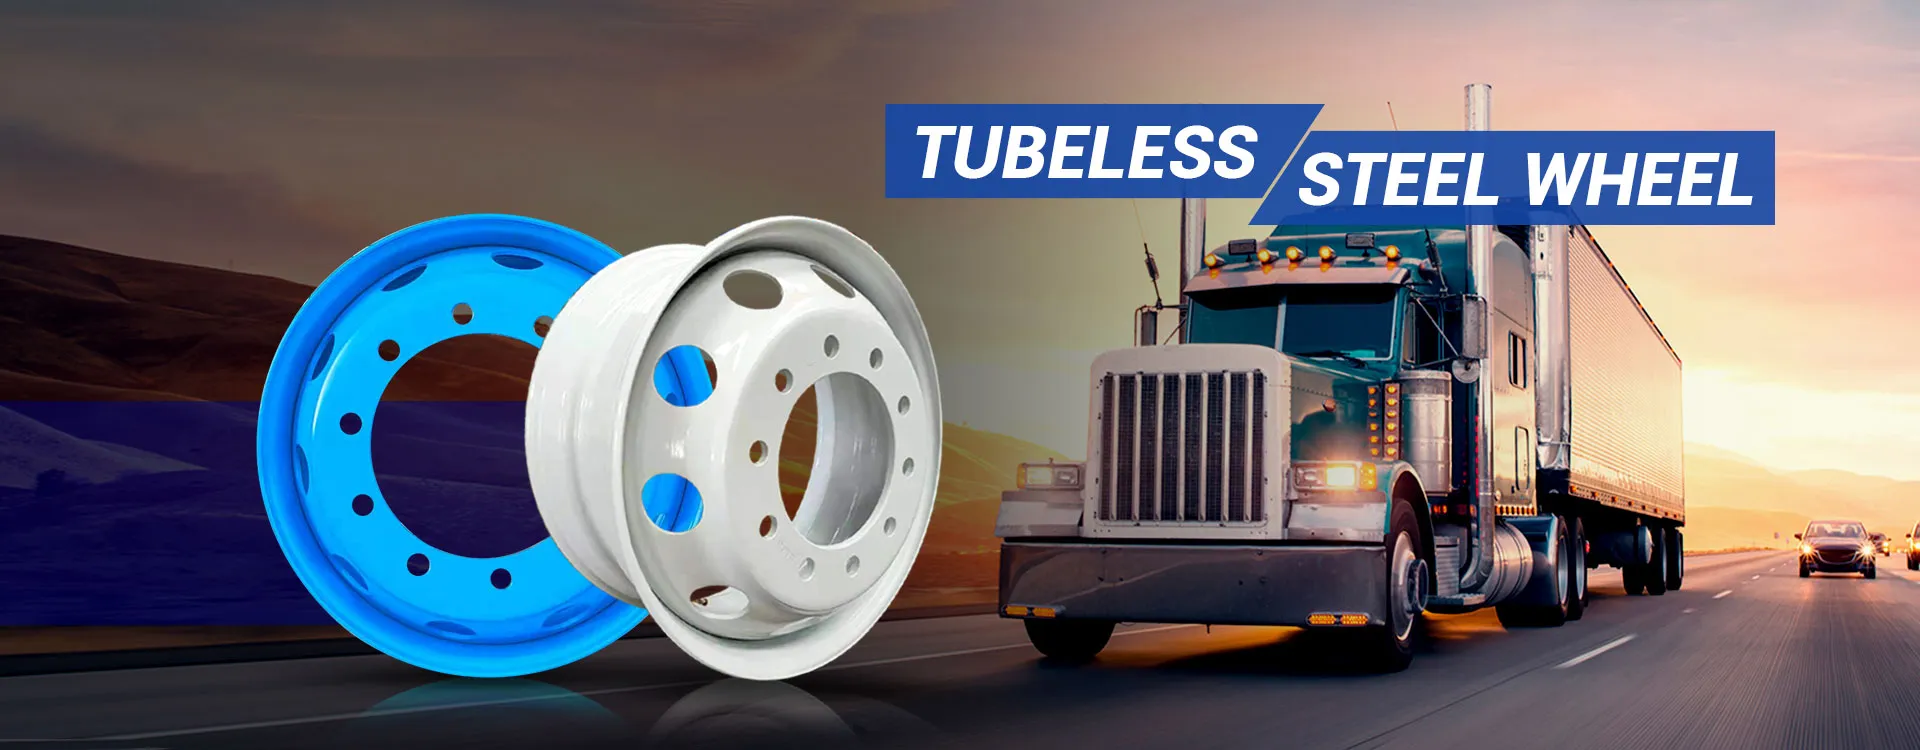 Tubeless Steel Wheel